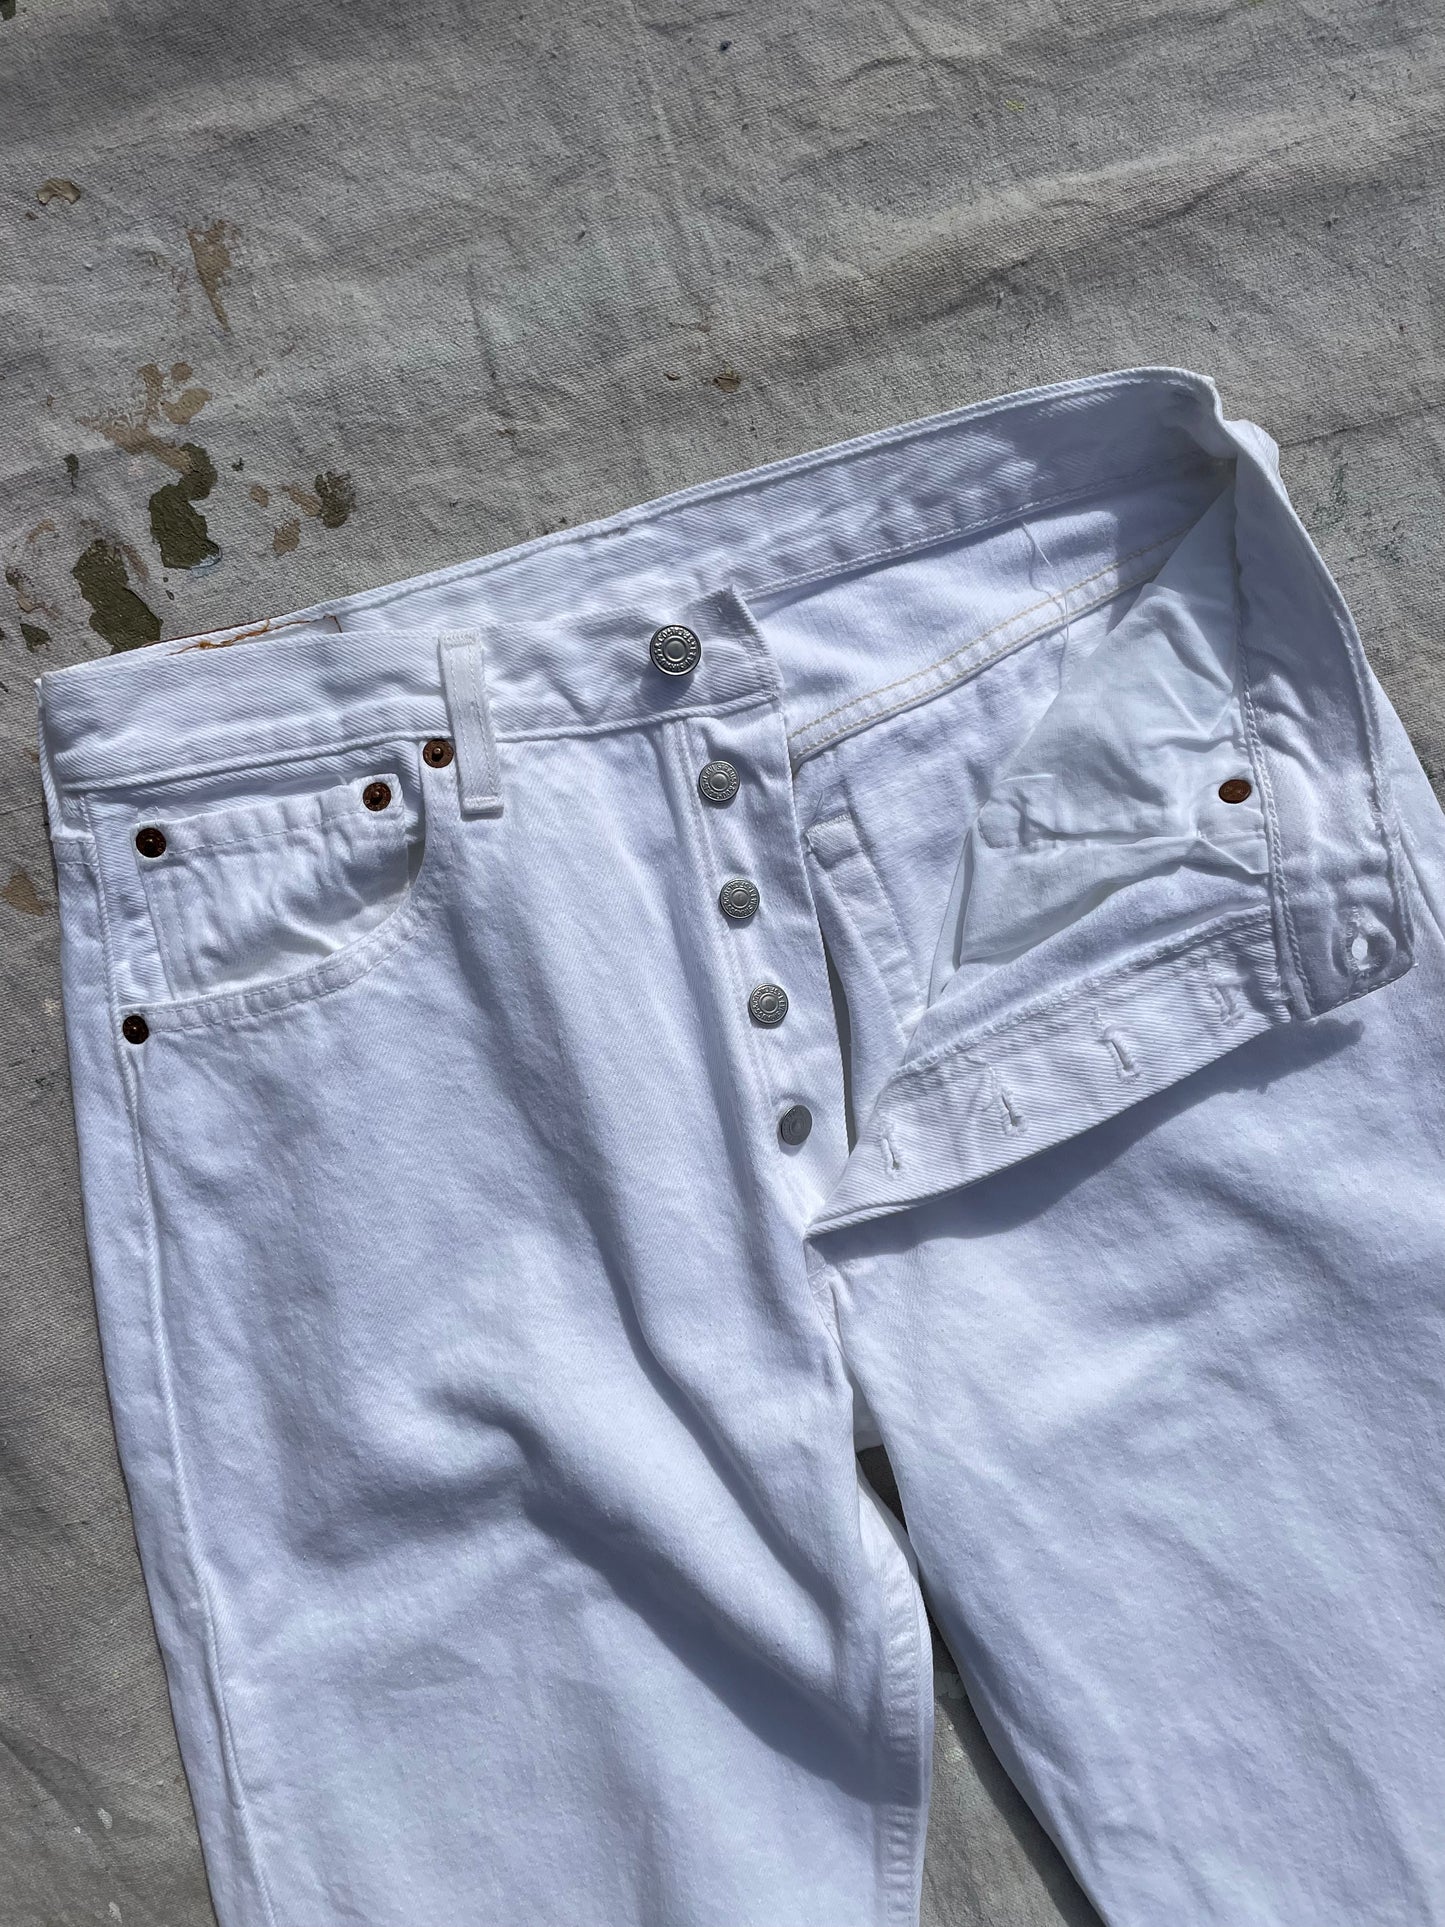 90s White Levi’s 501 Jeans